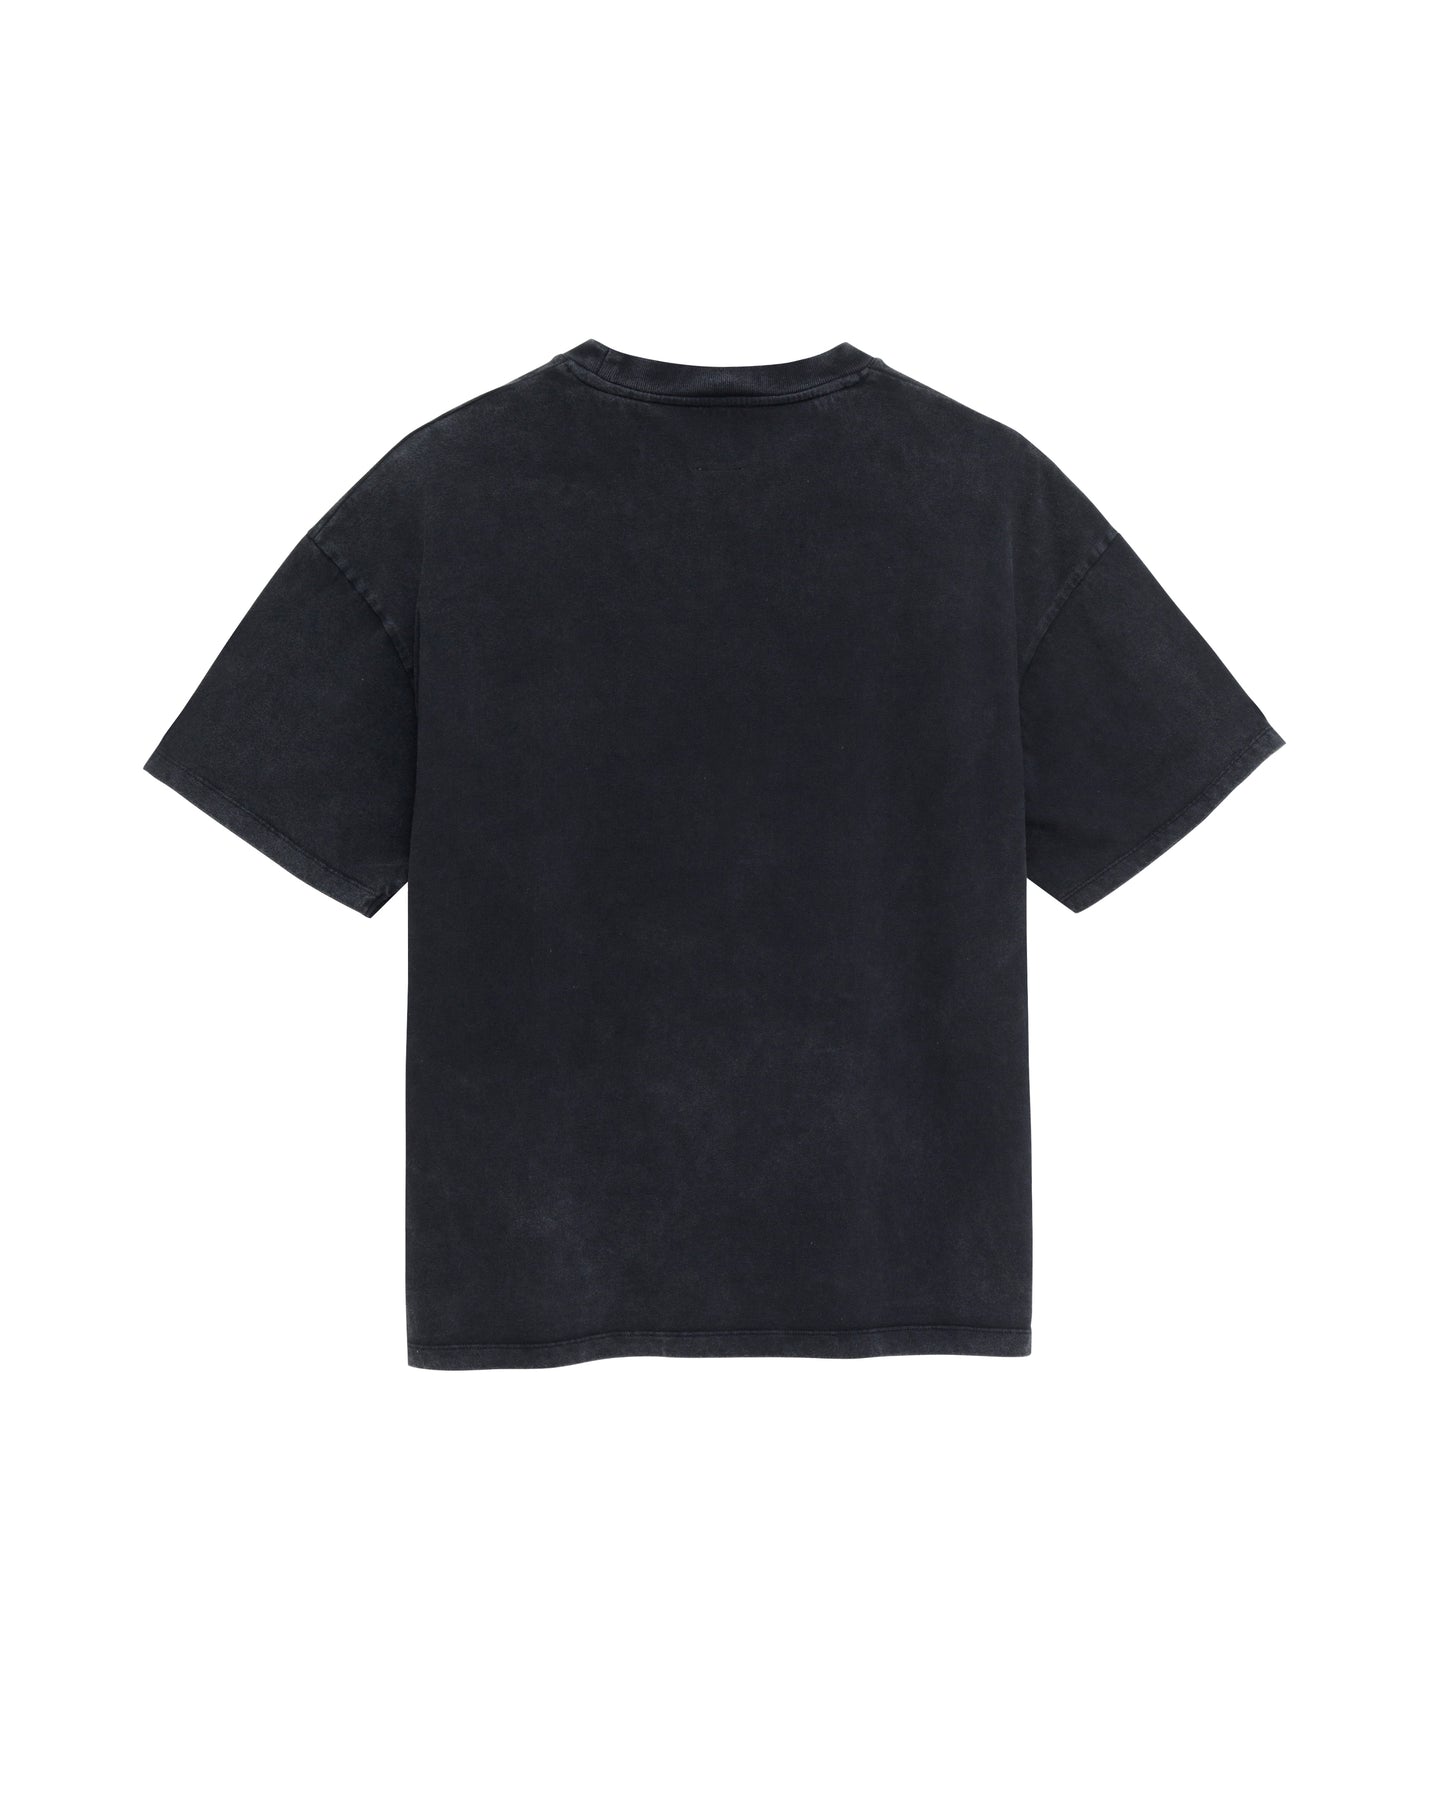 Thermal Black T-Shirt